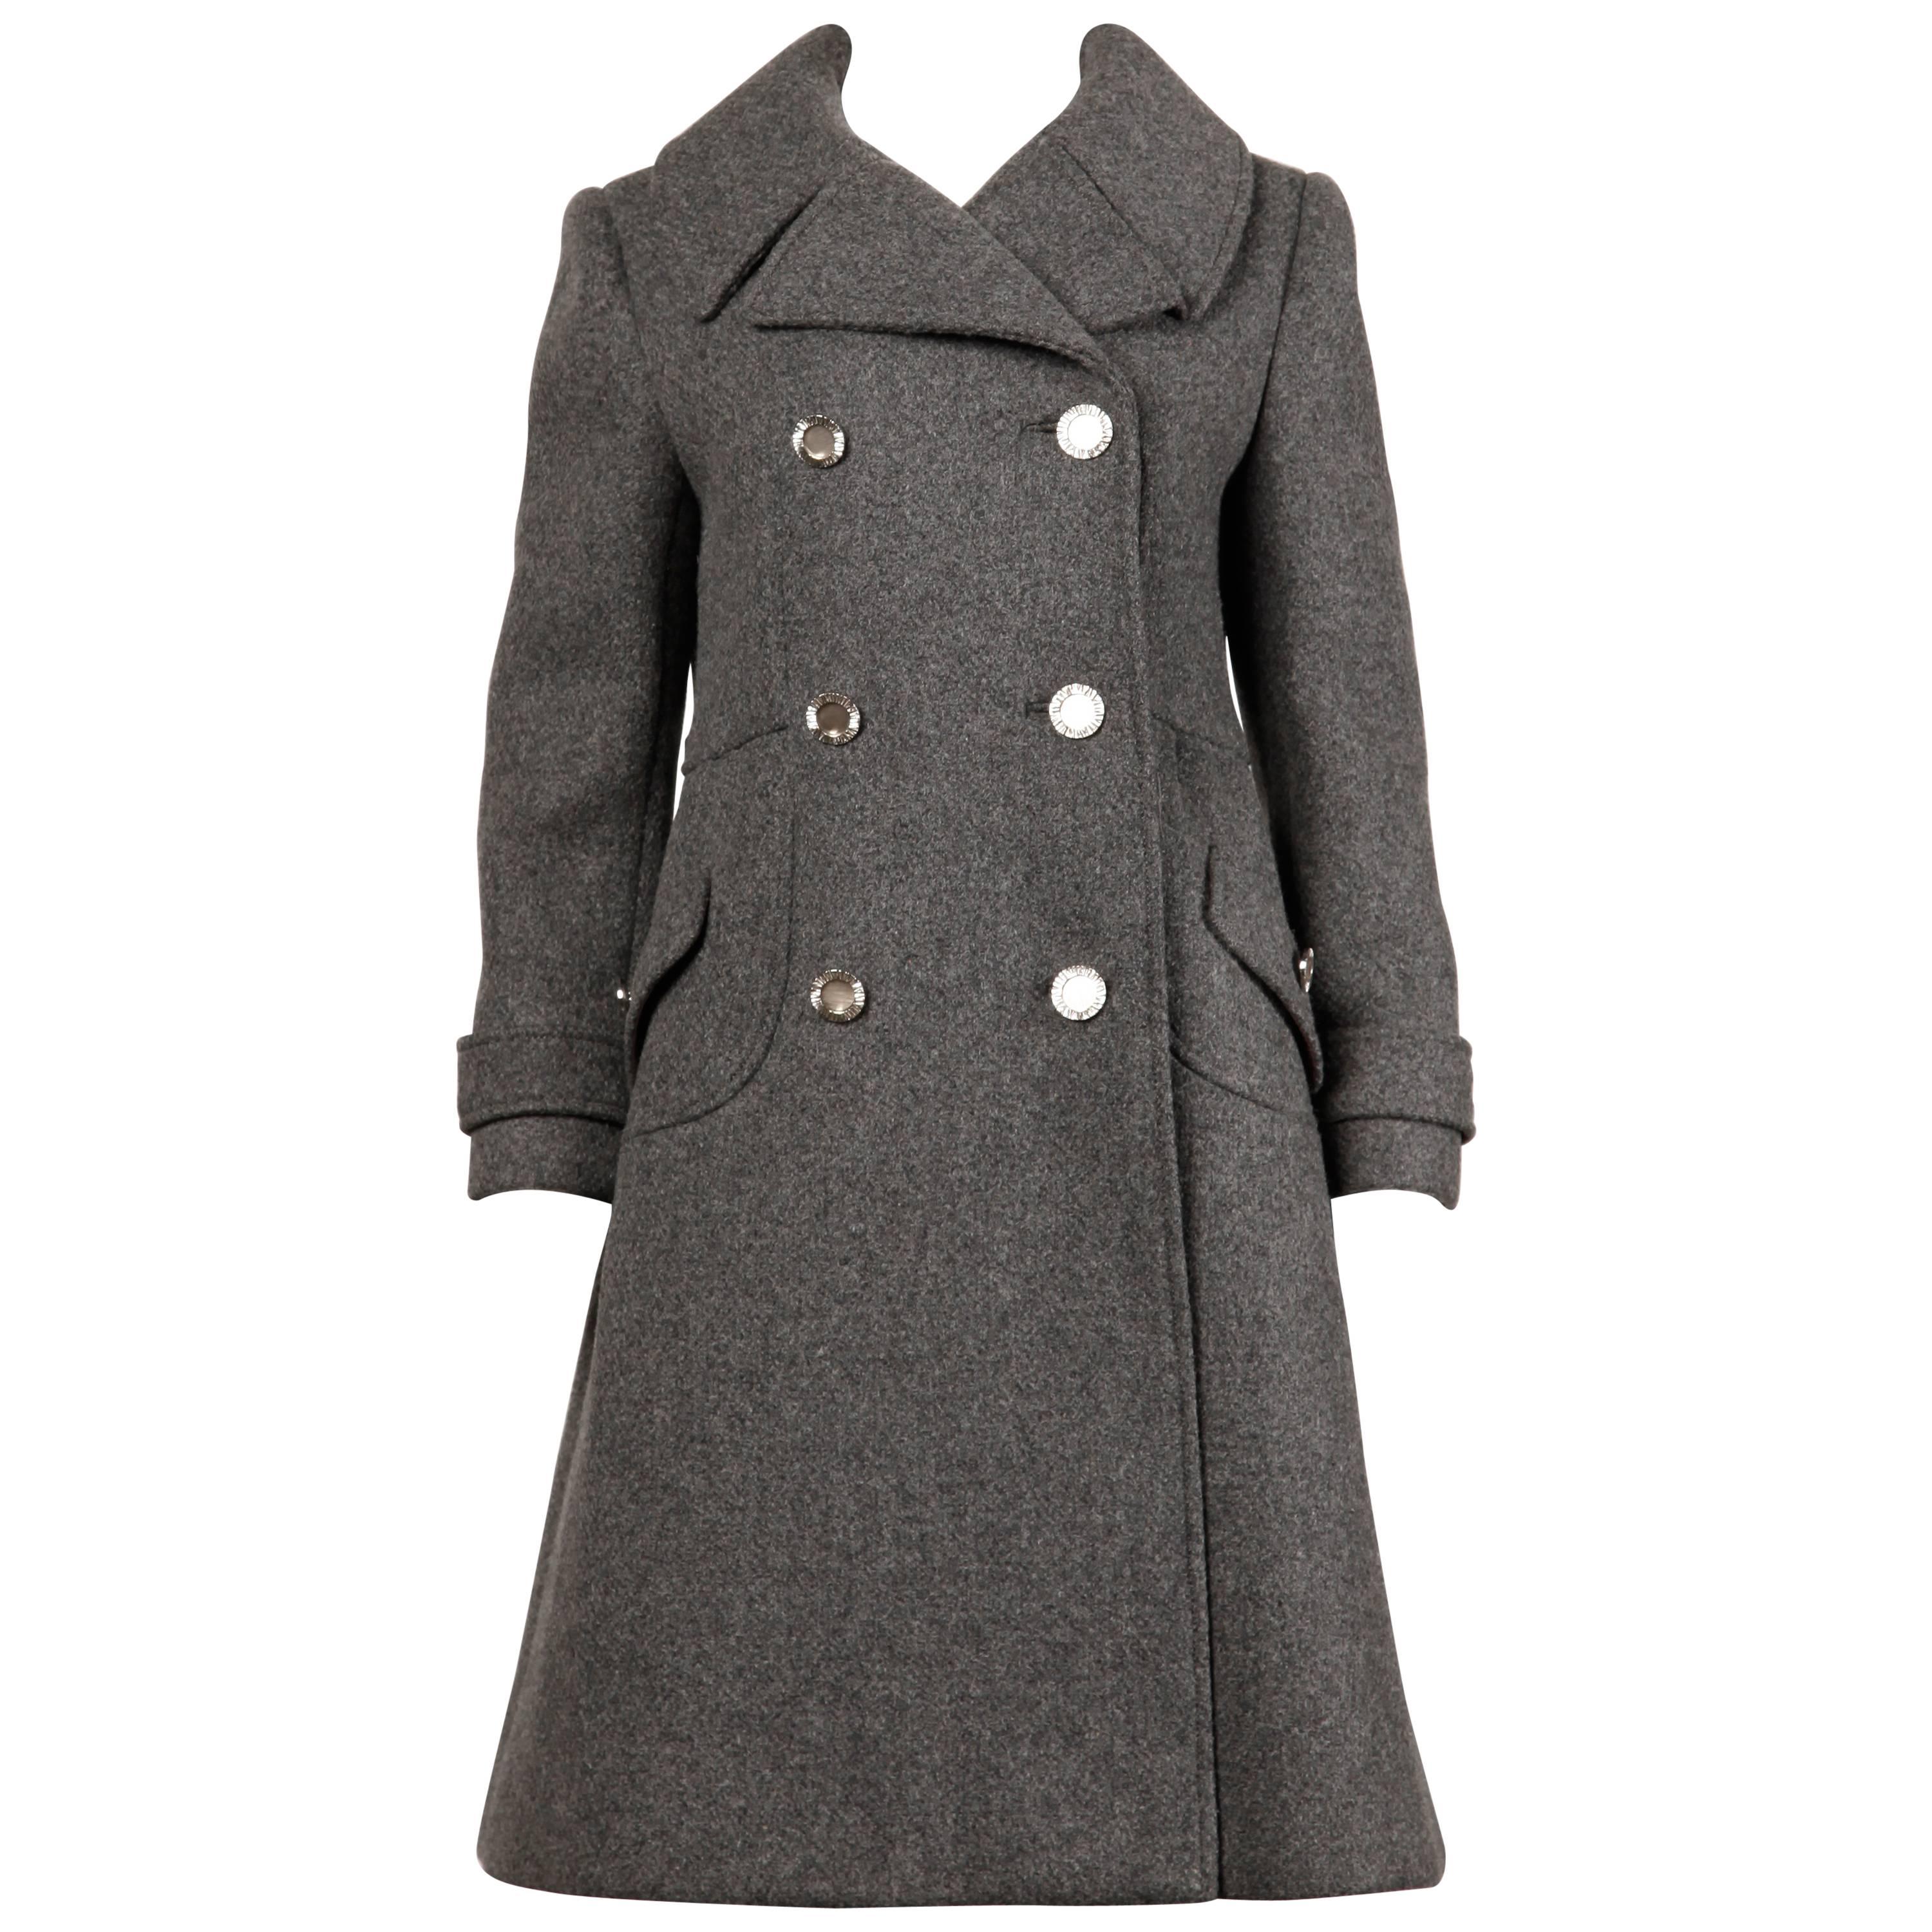 Bonwit Teller Vintage 1960s Heavy Gray Wool Military Inspired Coat